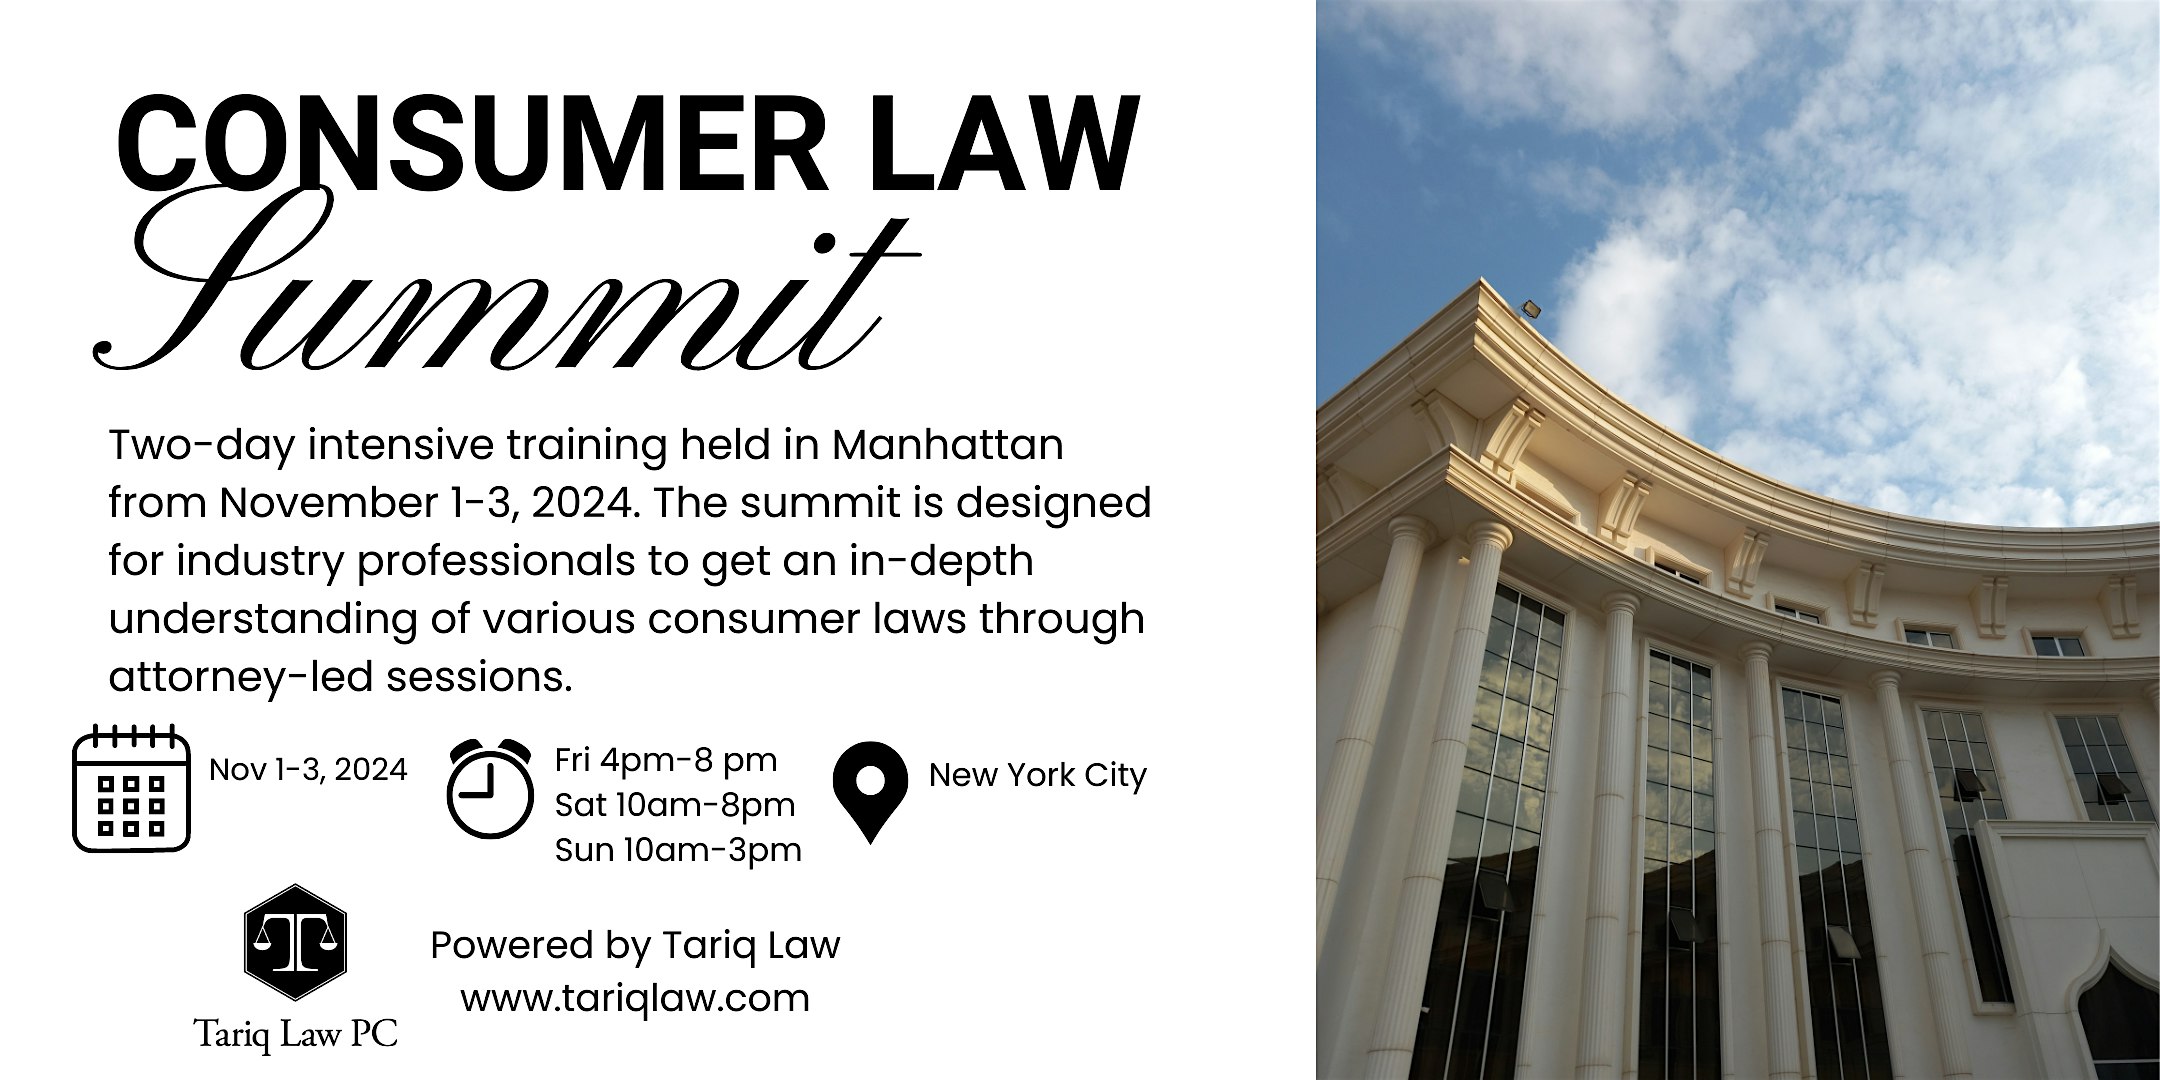 Consumer Law Summit, New York City, November 1-3, 2024